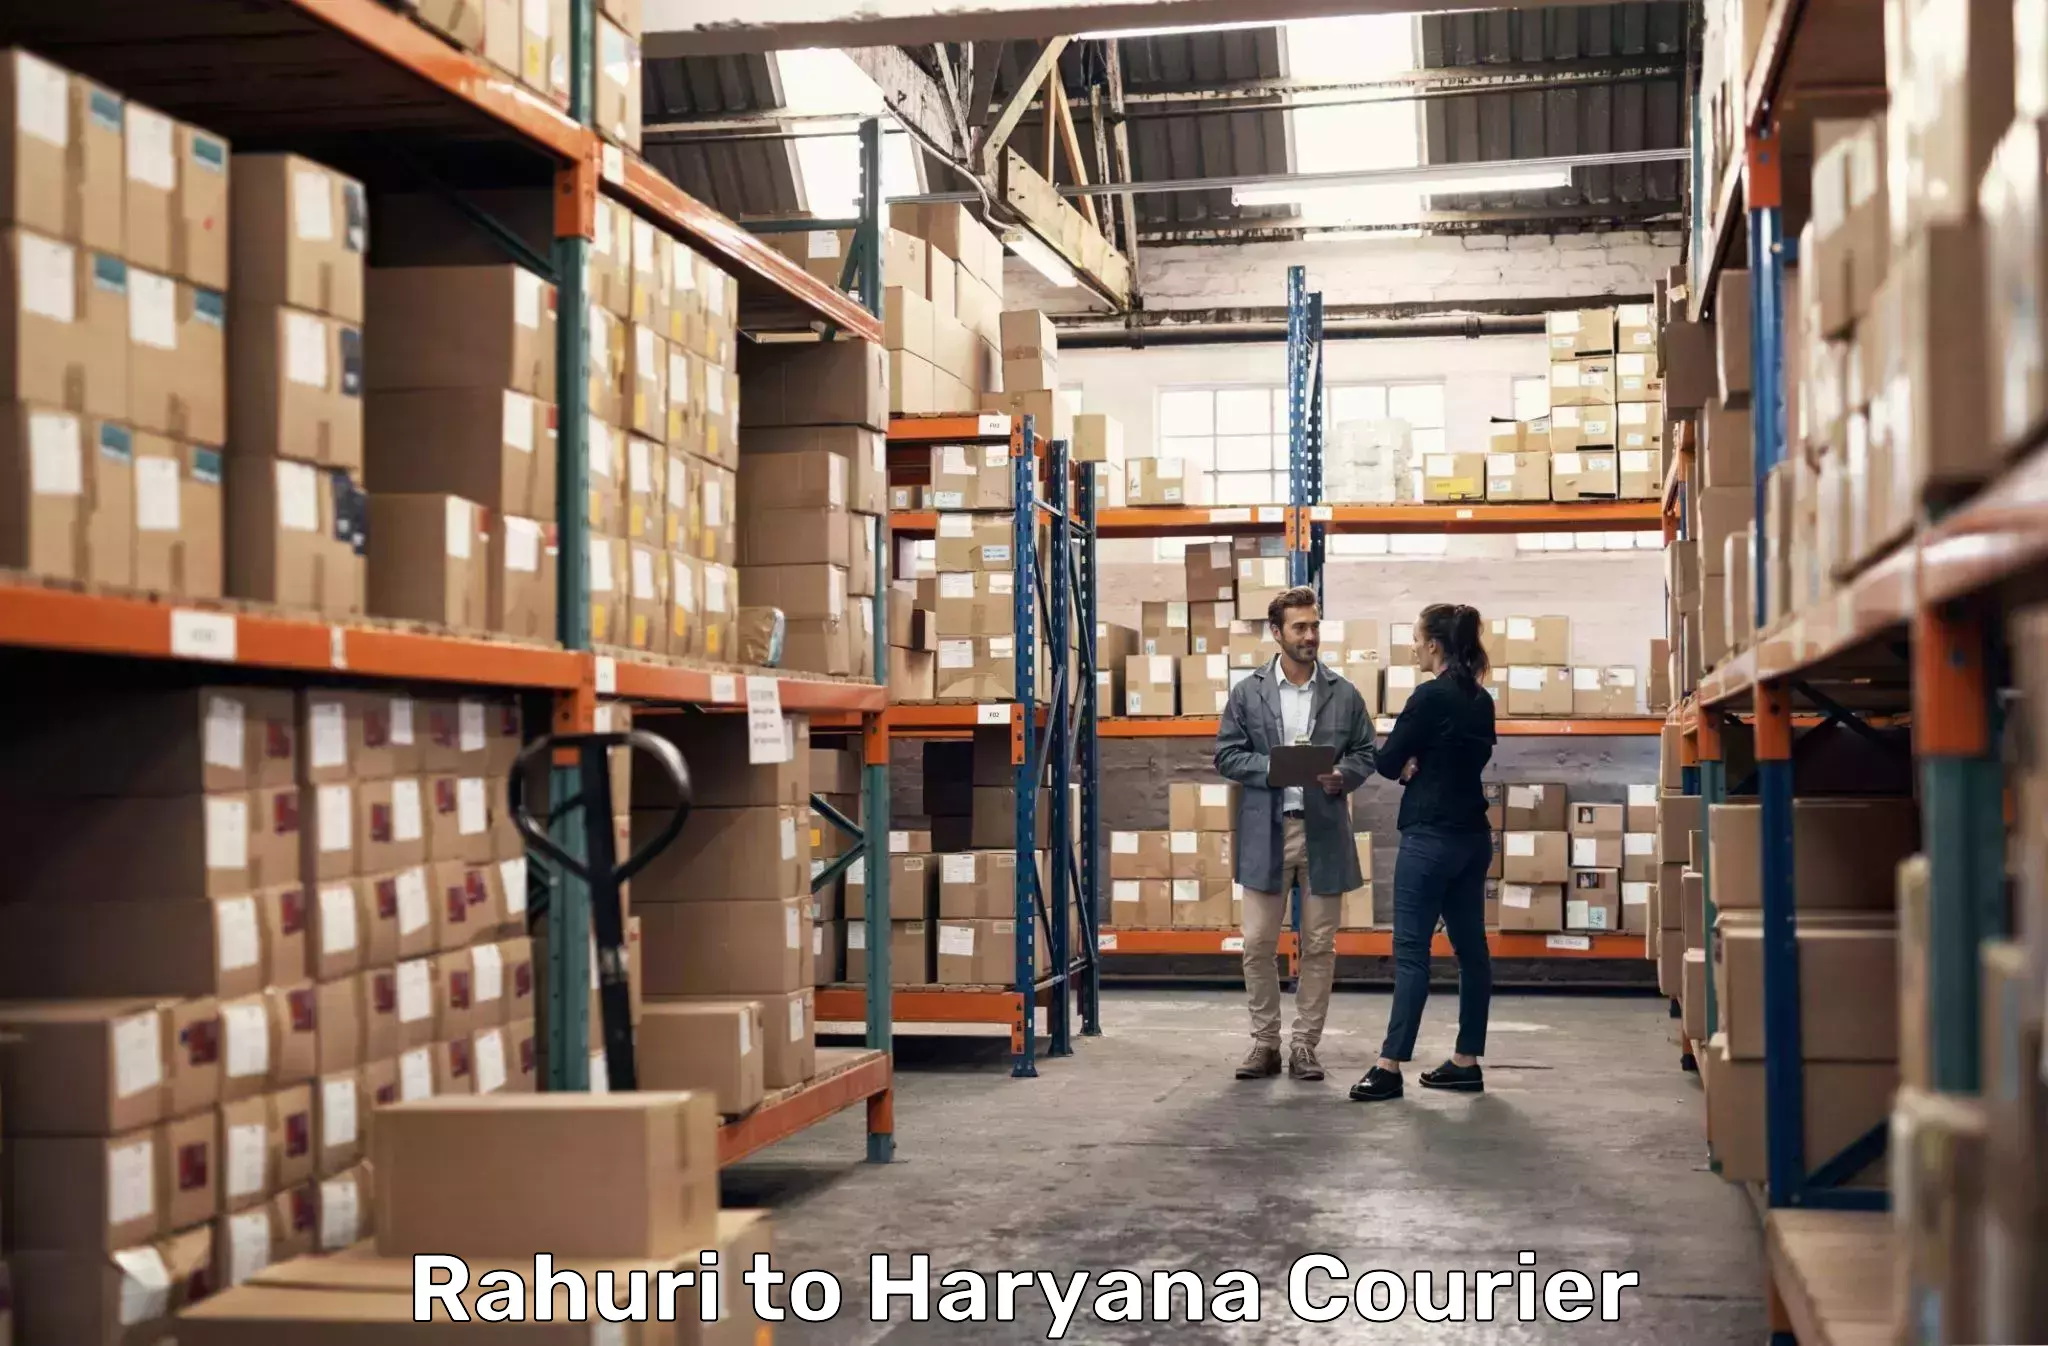 Courier service comparison Rahuri to Gurgaon